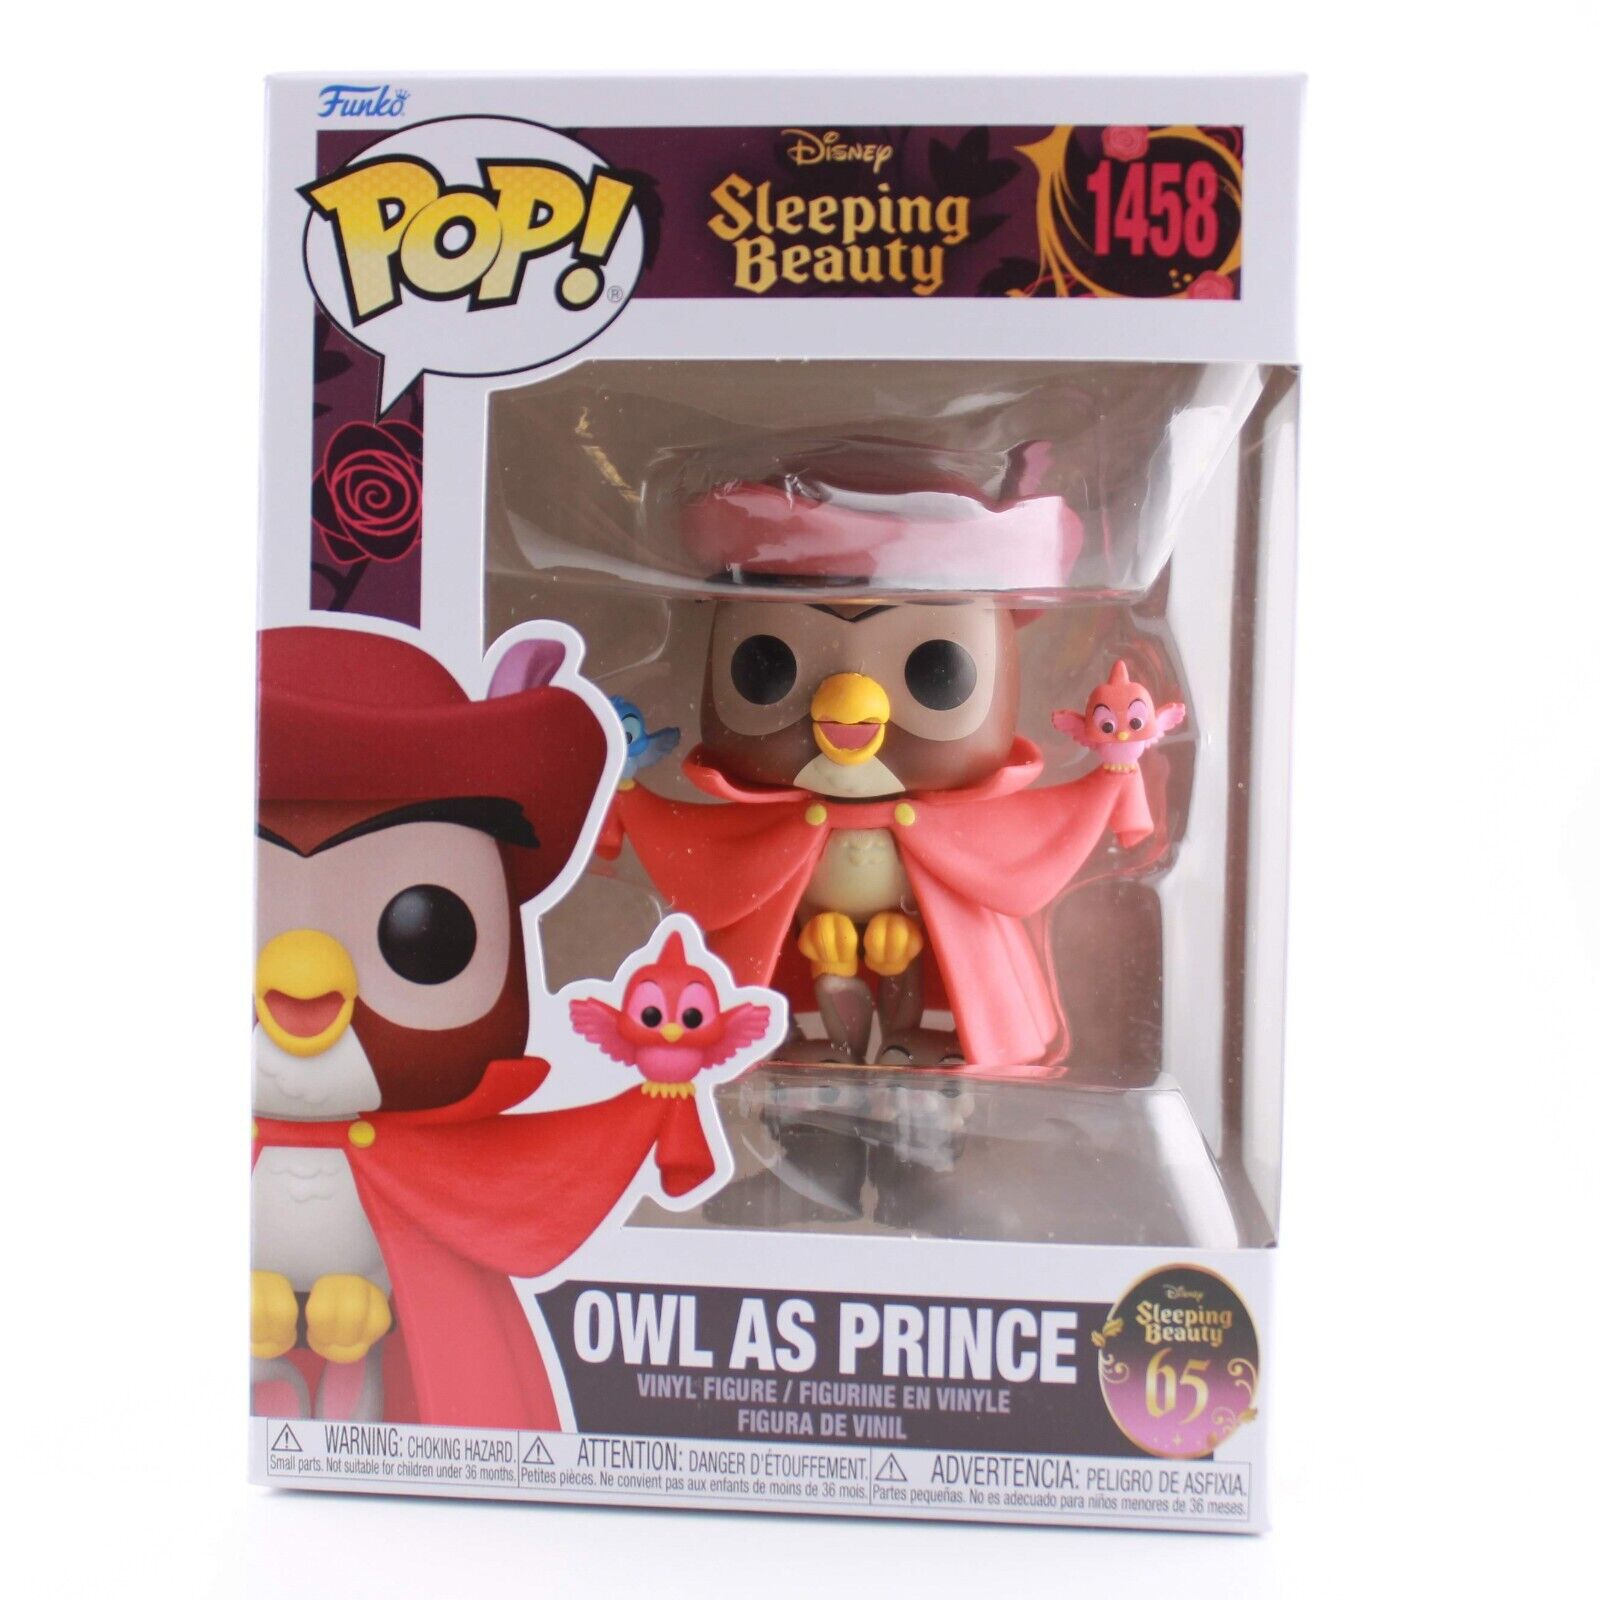 Funko Pop Disney Sleeping Beauty 65th Anniversary - Owl as Prince # 1458